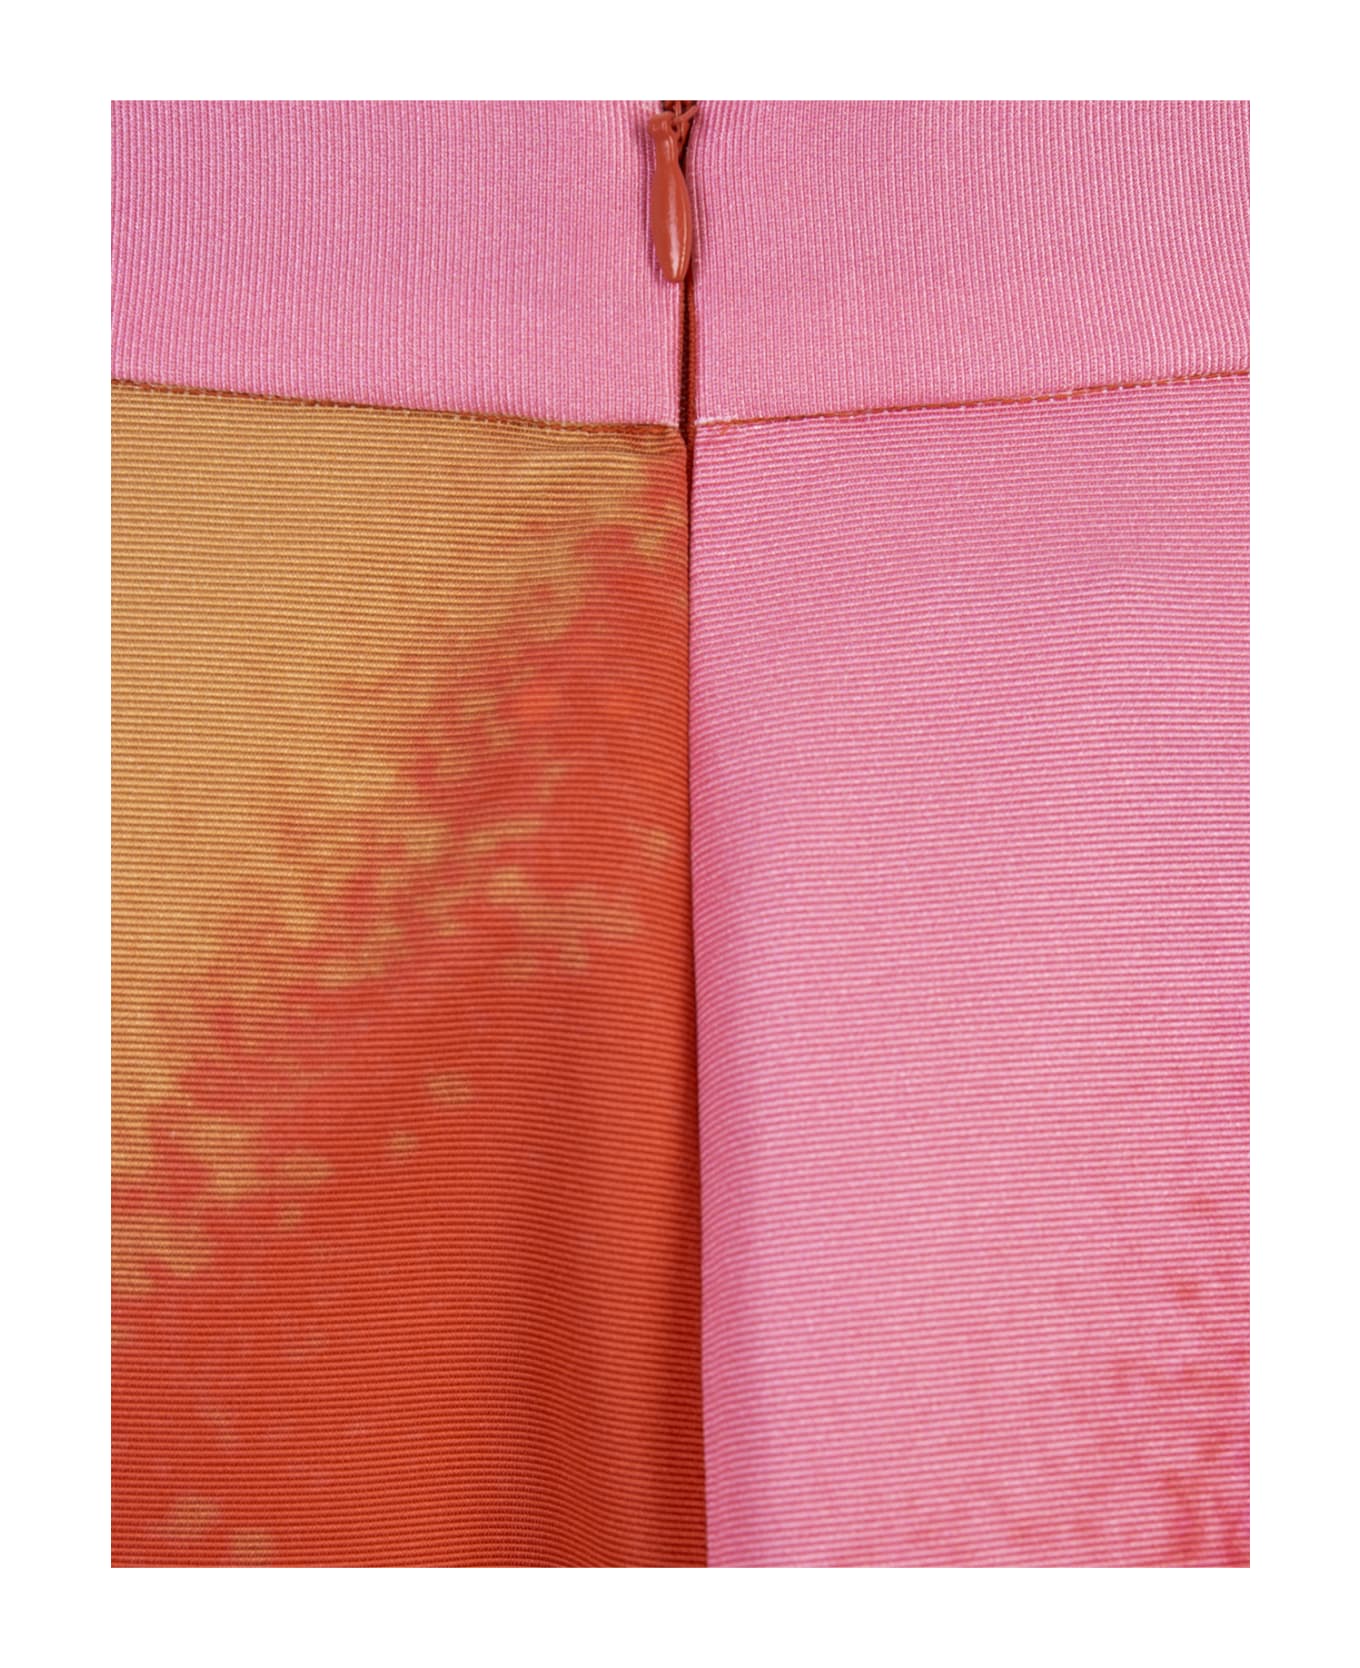 Gianluca Capannolo Printed Orange Silk Midi Skirt - Orange スカート